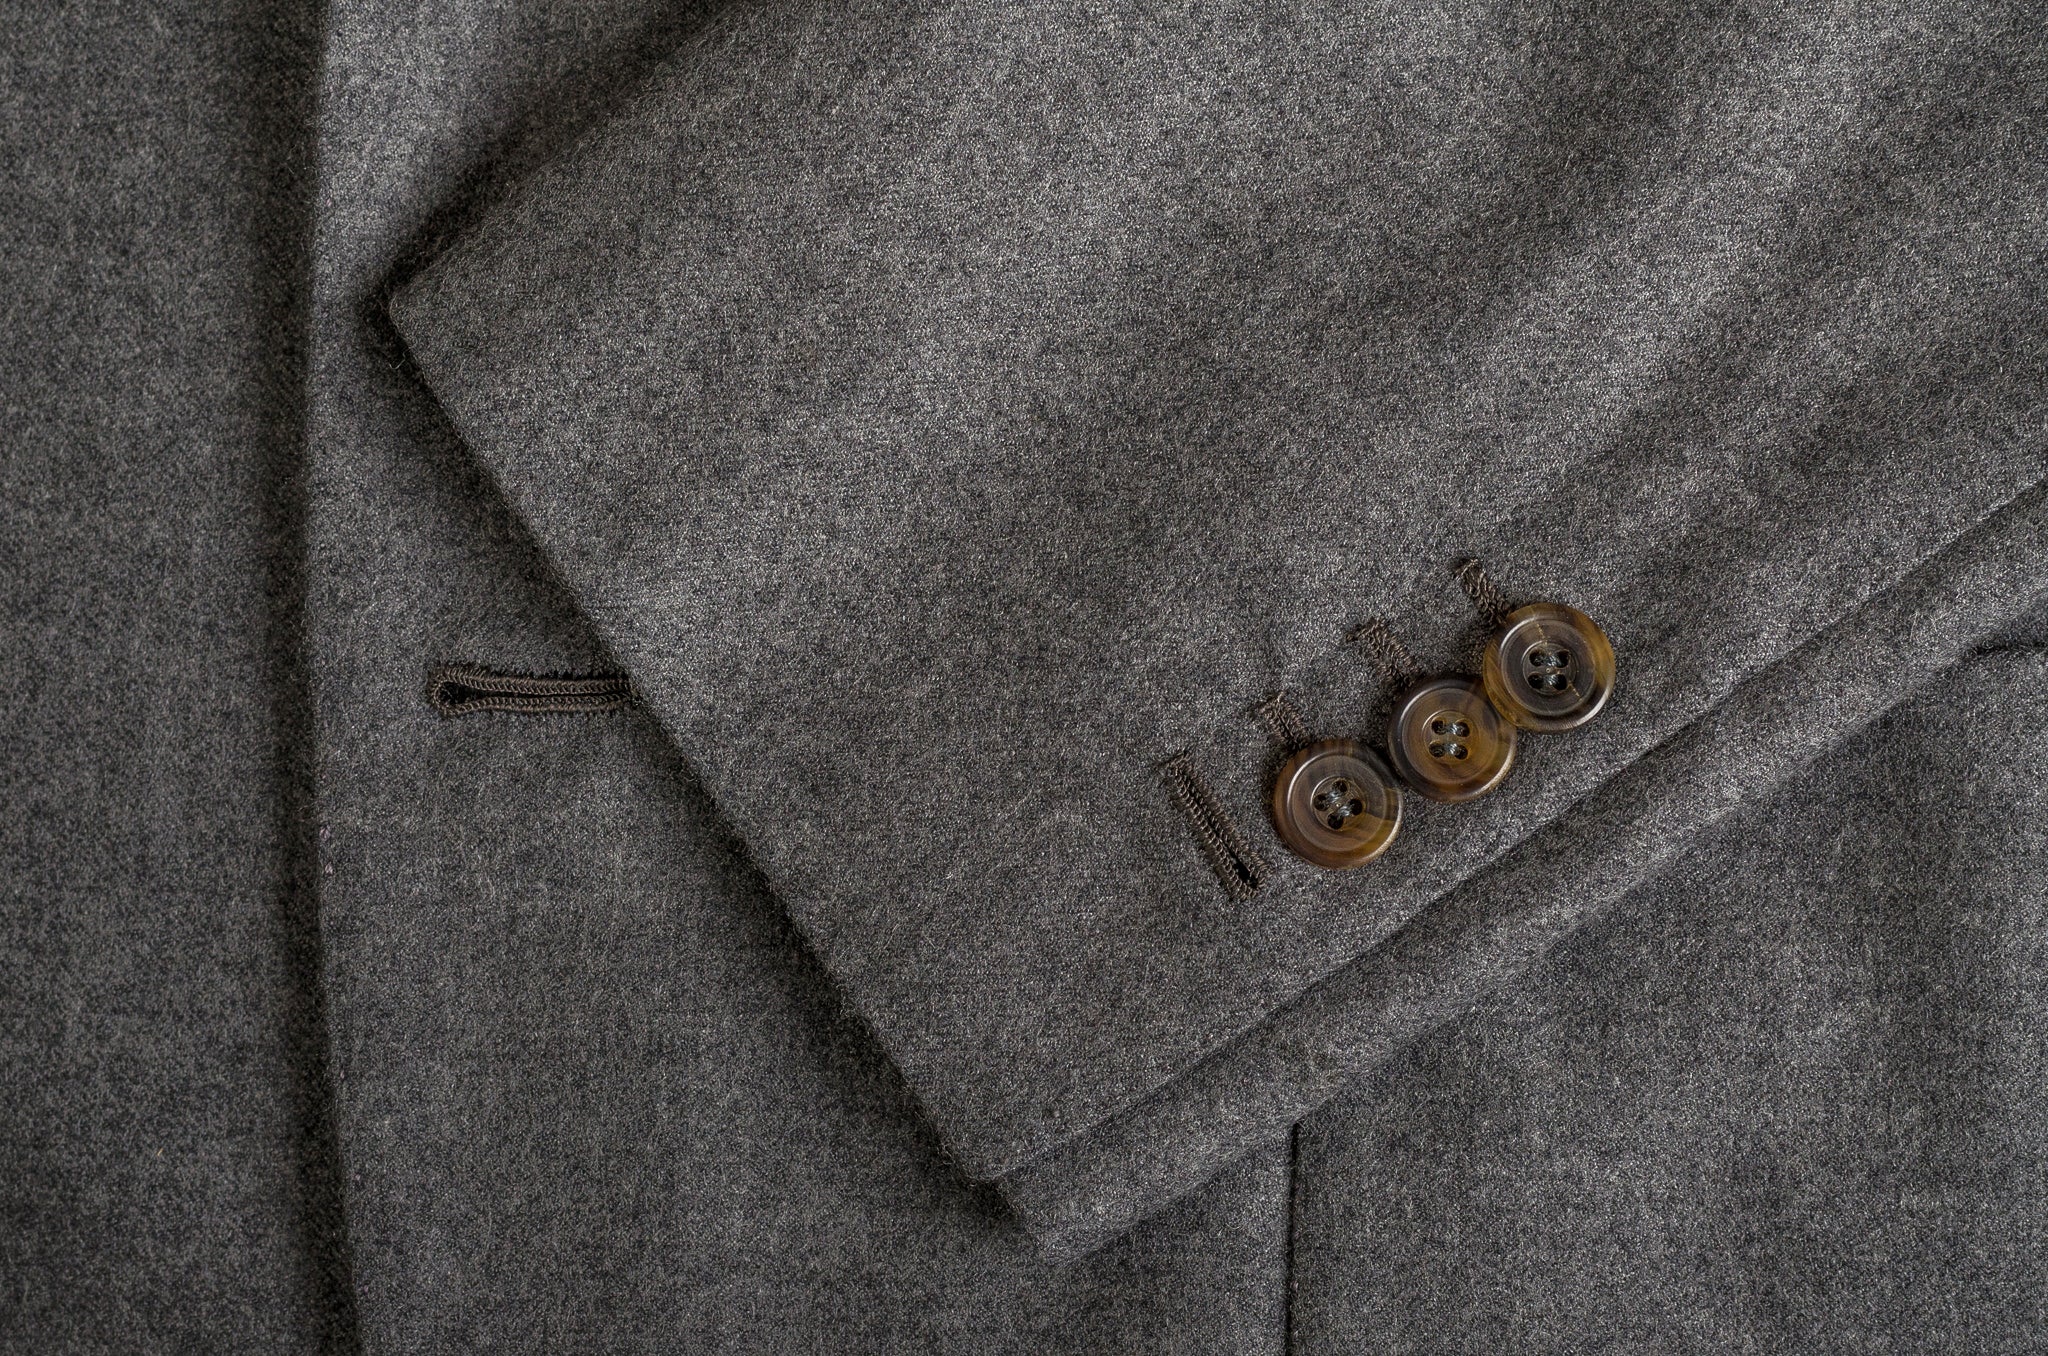 RUBINACCI Handmade Bespoke Gray Wool Flannel Blazer Jacket EU 50 US 38 40 RUBINACCI